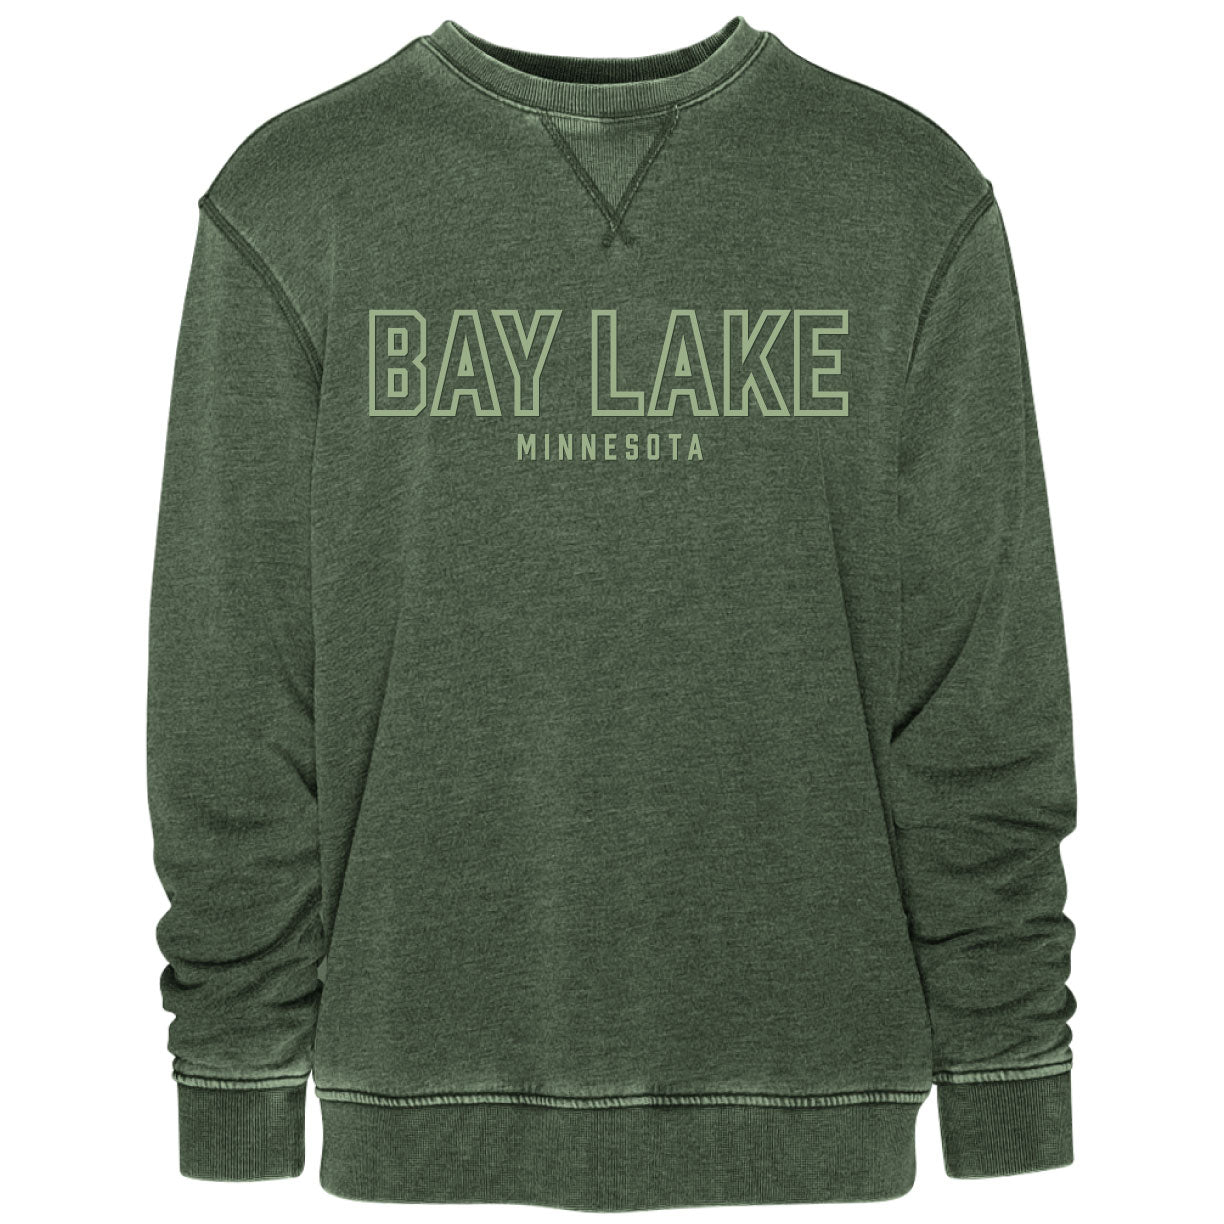 Bay Lake Vintage Crew - Spruce